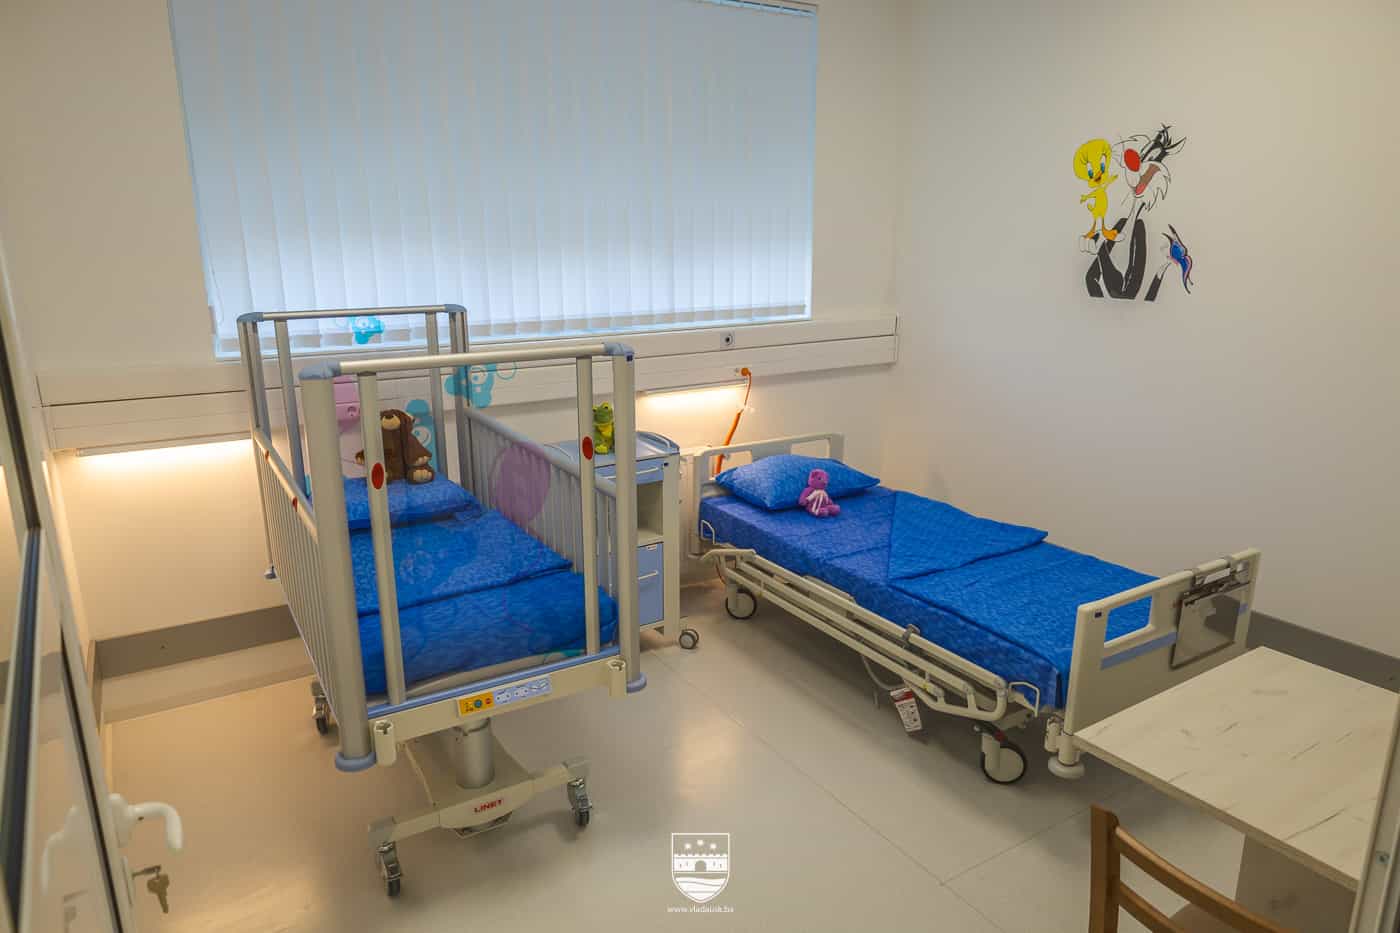 Otvoren obnovljeni odjel dječje hirurgije Kantonalne bolnice “Dr. Irfan Ljubijankić”